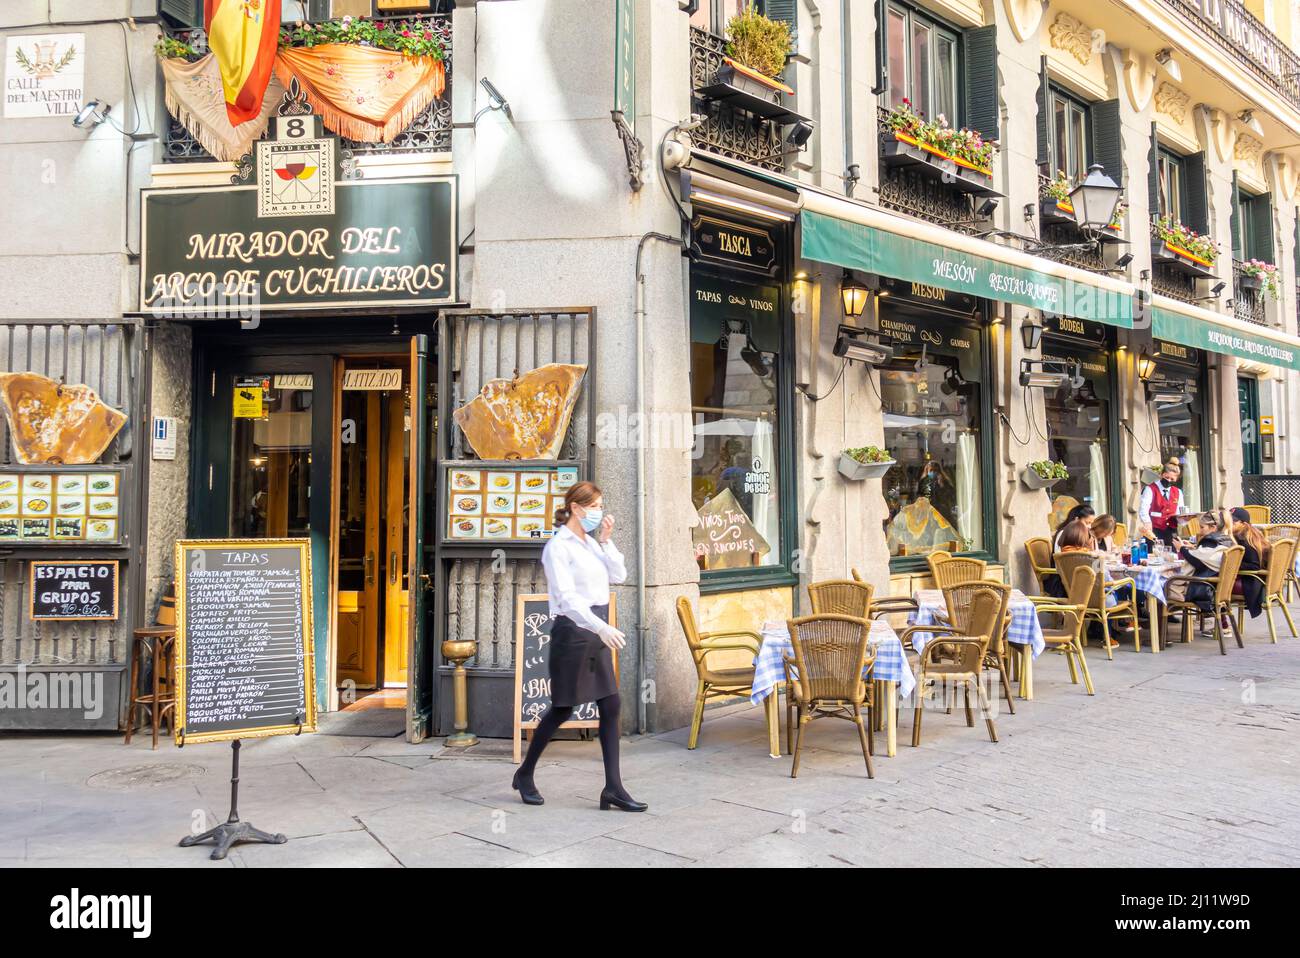 Mirador del Arco de Cuchilleros, restaurant eatery serving traditional Spanish food in madrid, Spain Stock Photo